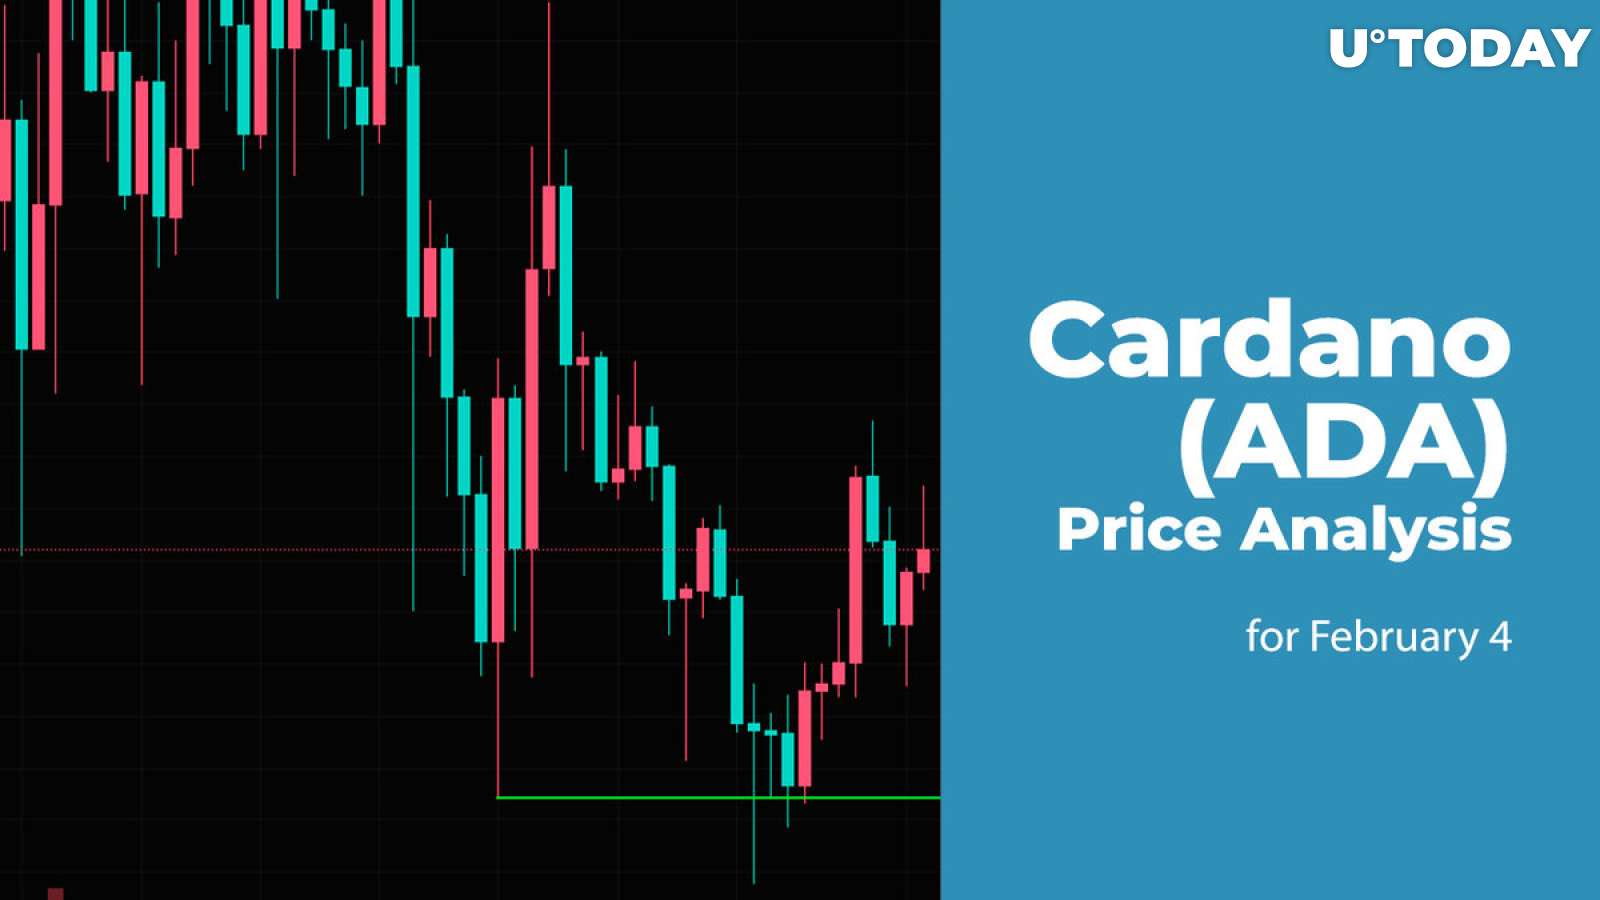 Cardano (ADA) Price Analysis for February 4